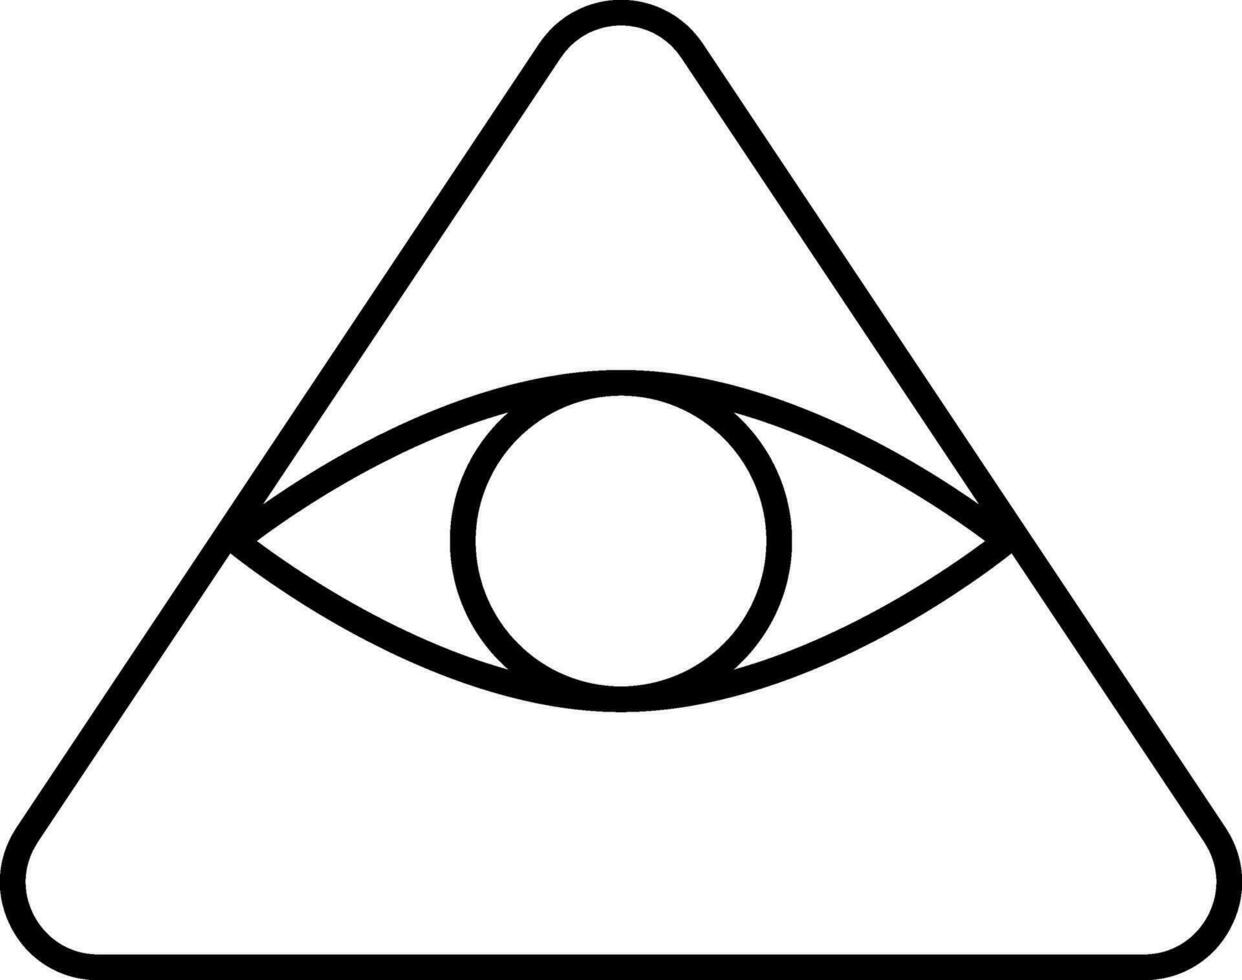 piramide occhio nero ictus icona o simbolo. vettore